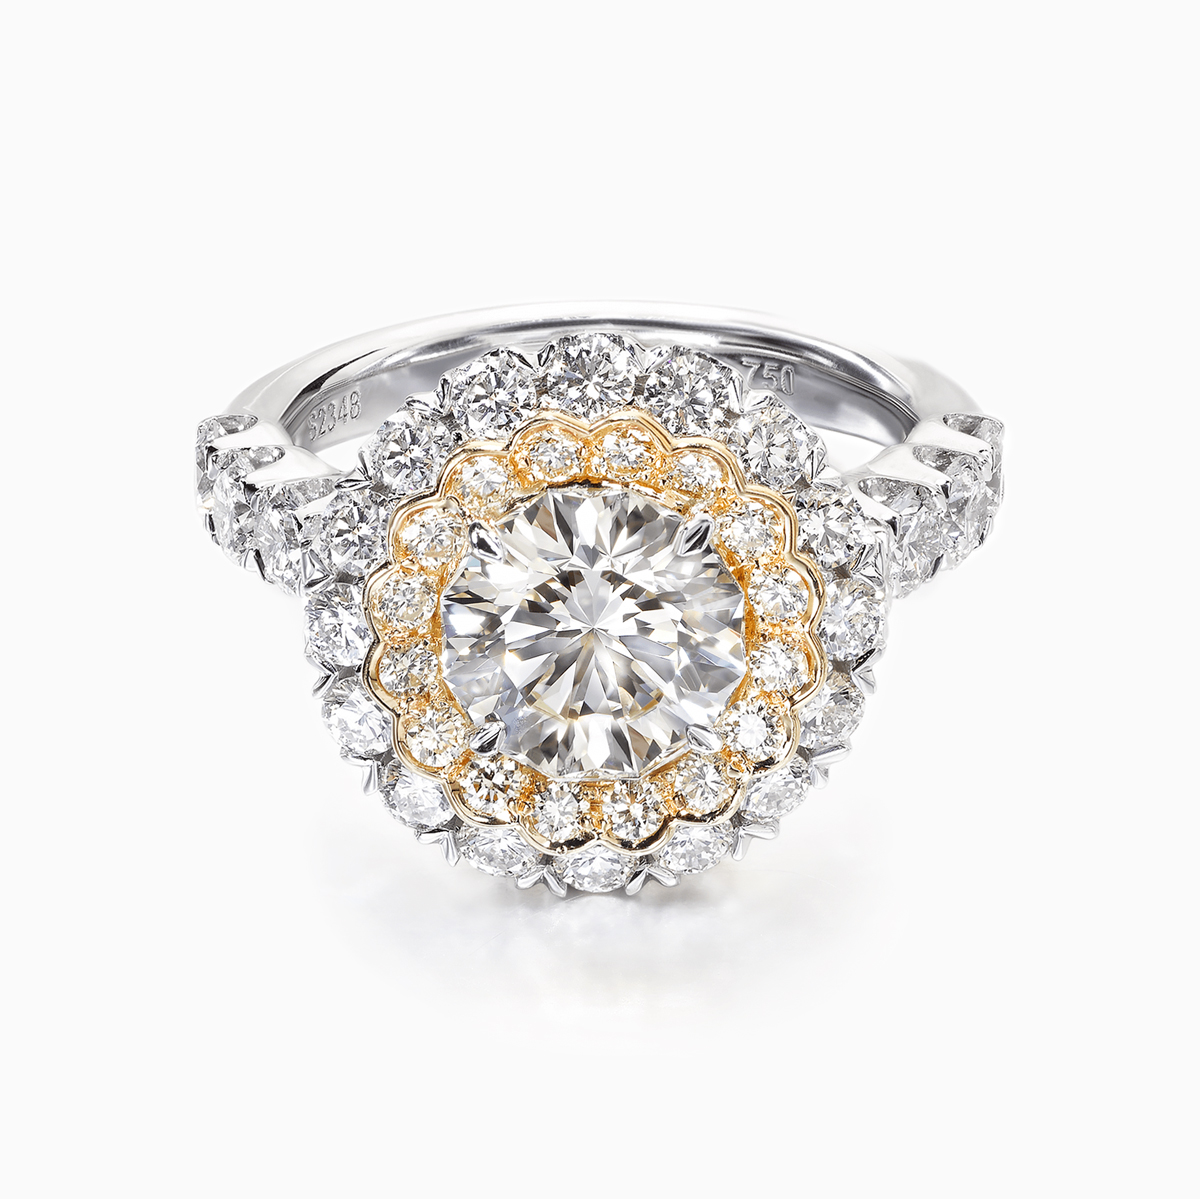 Double Halo Two-Tone Crisscut Diamond Engagement Ring